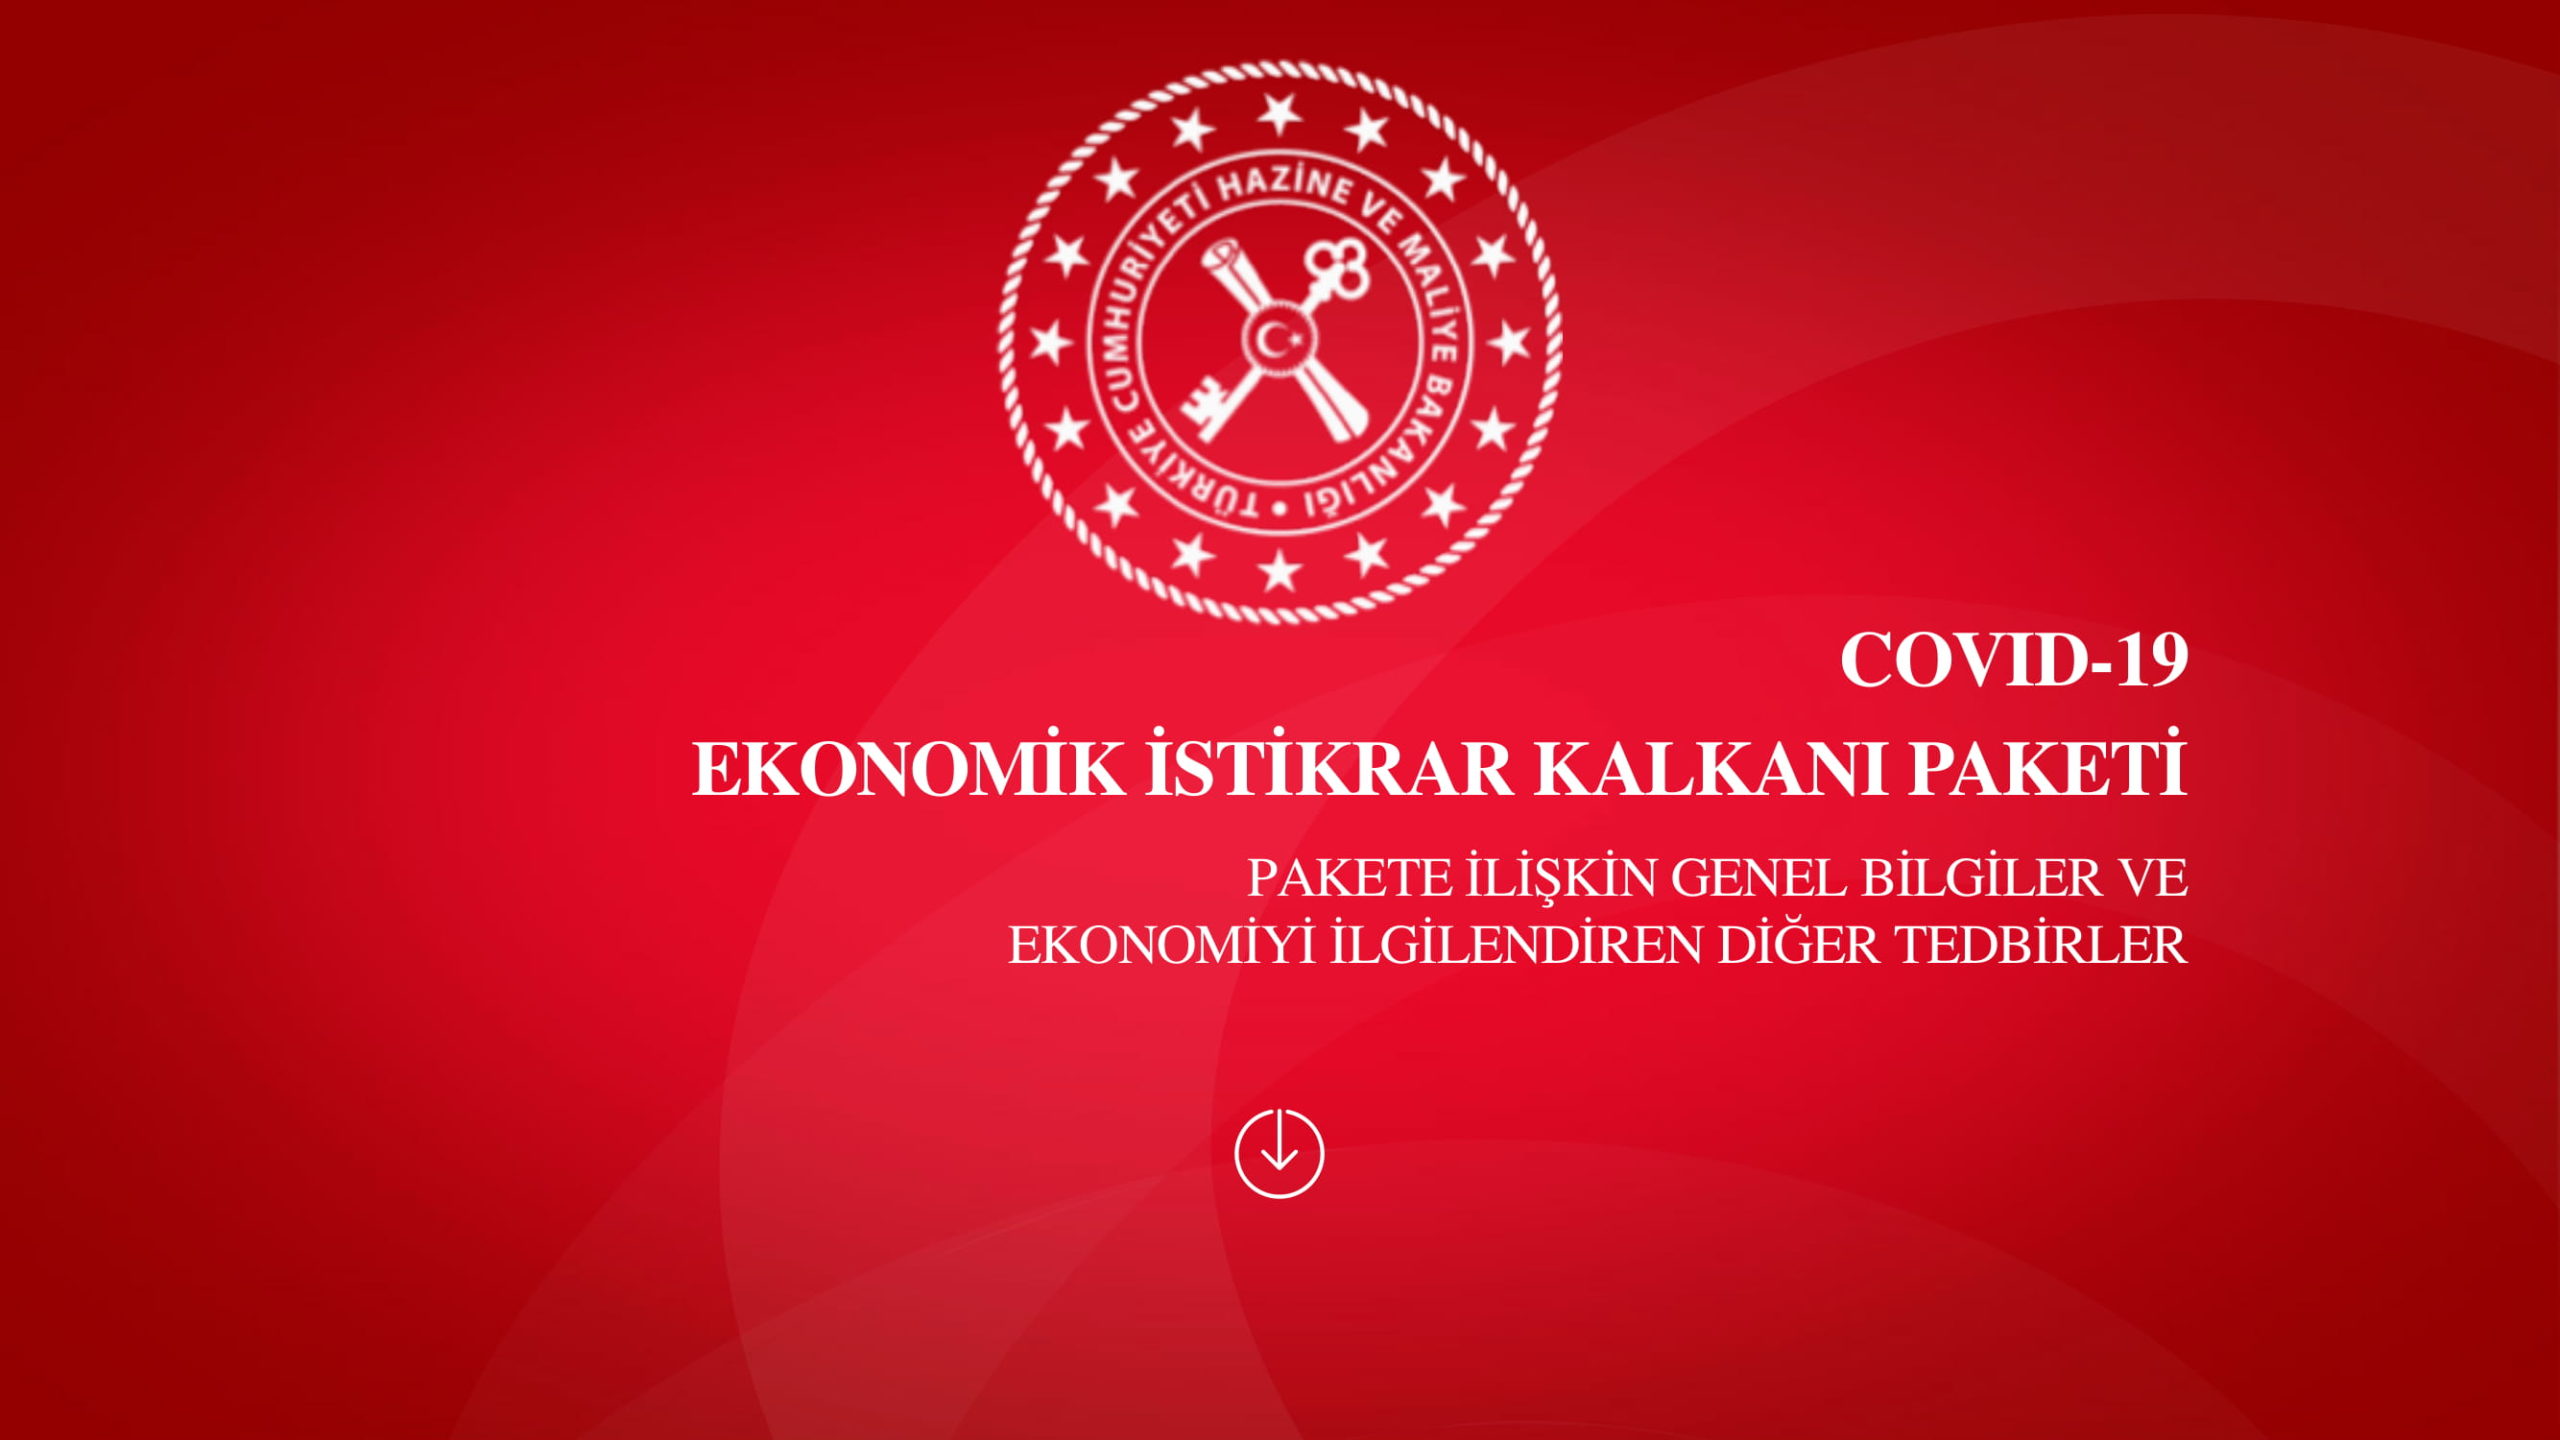 covid-19 ekonomik istikrara paketi